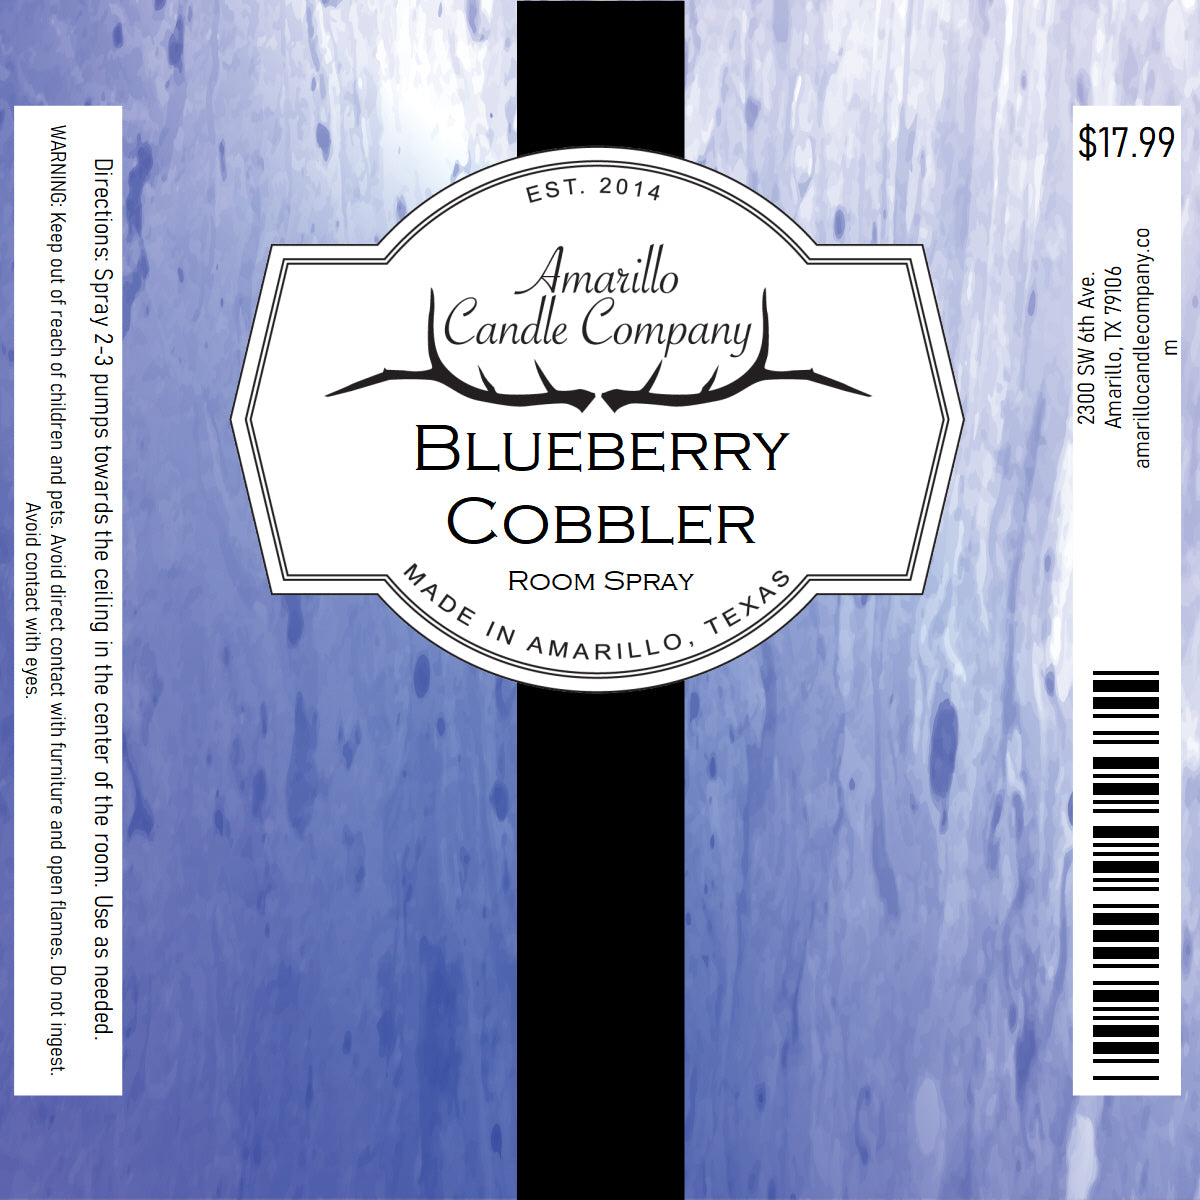 Blueberry Cobbler Room Spray